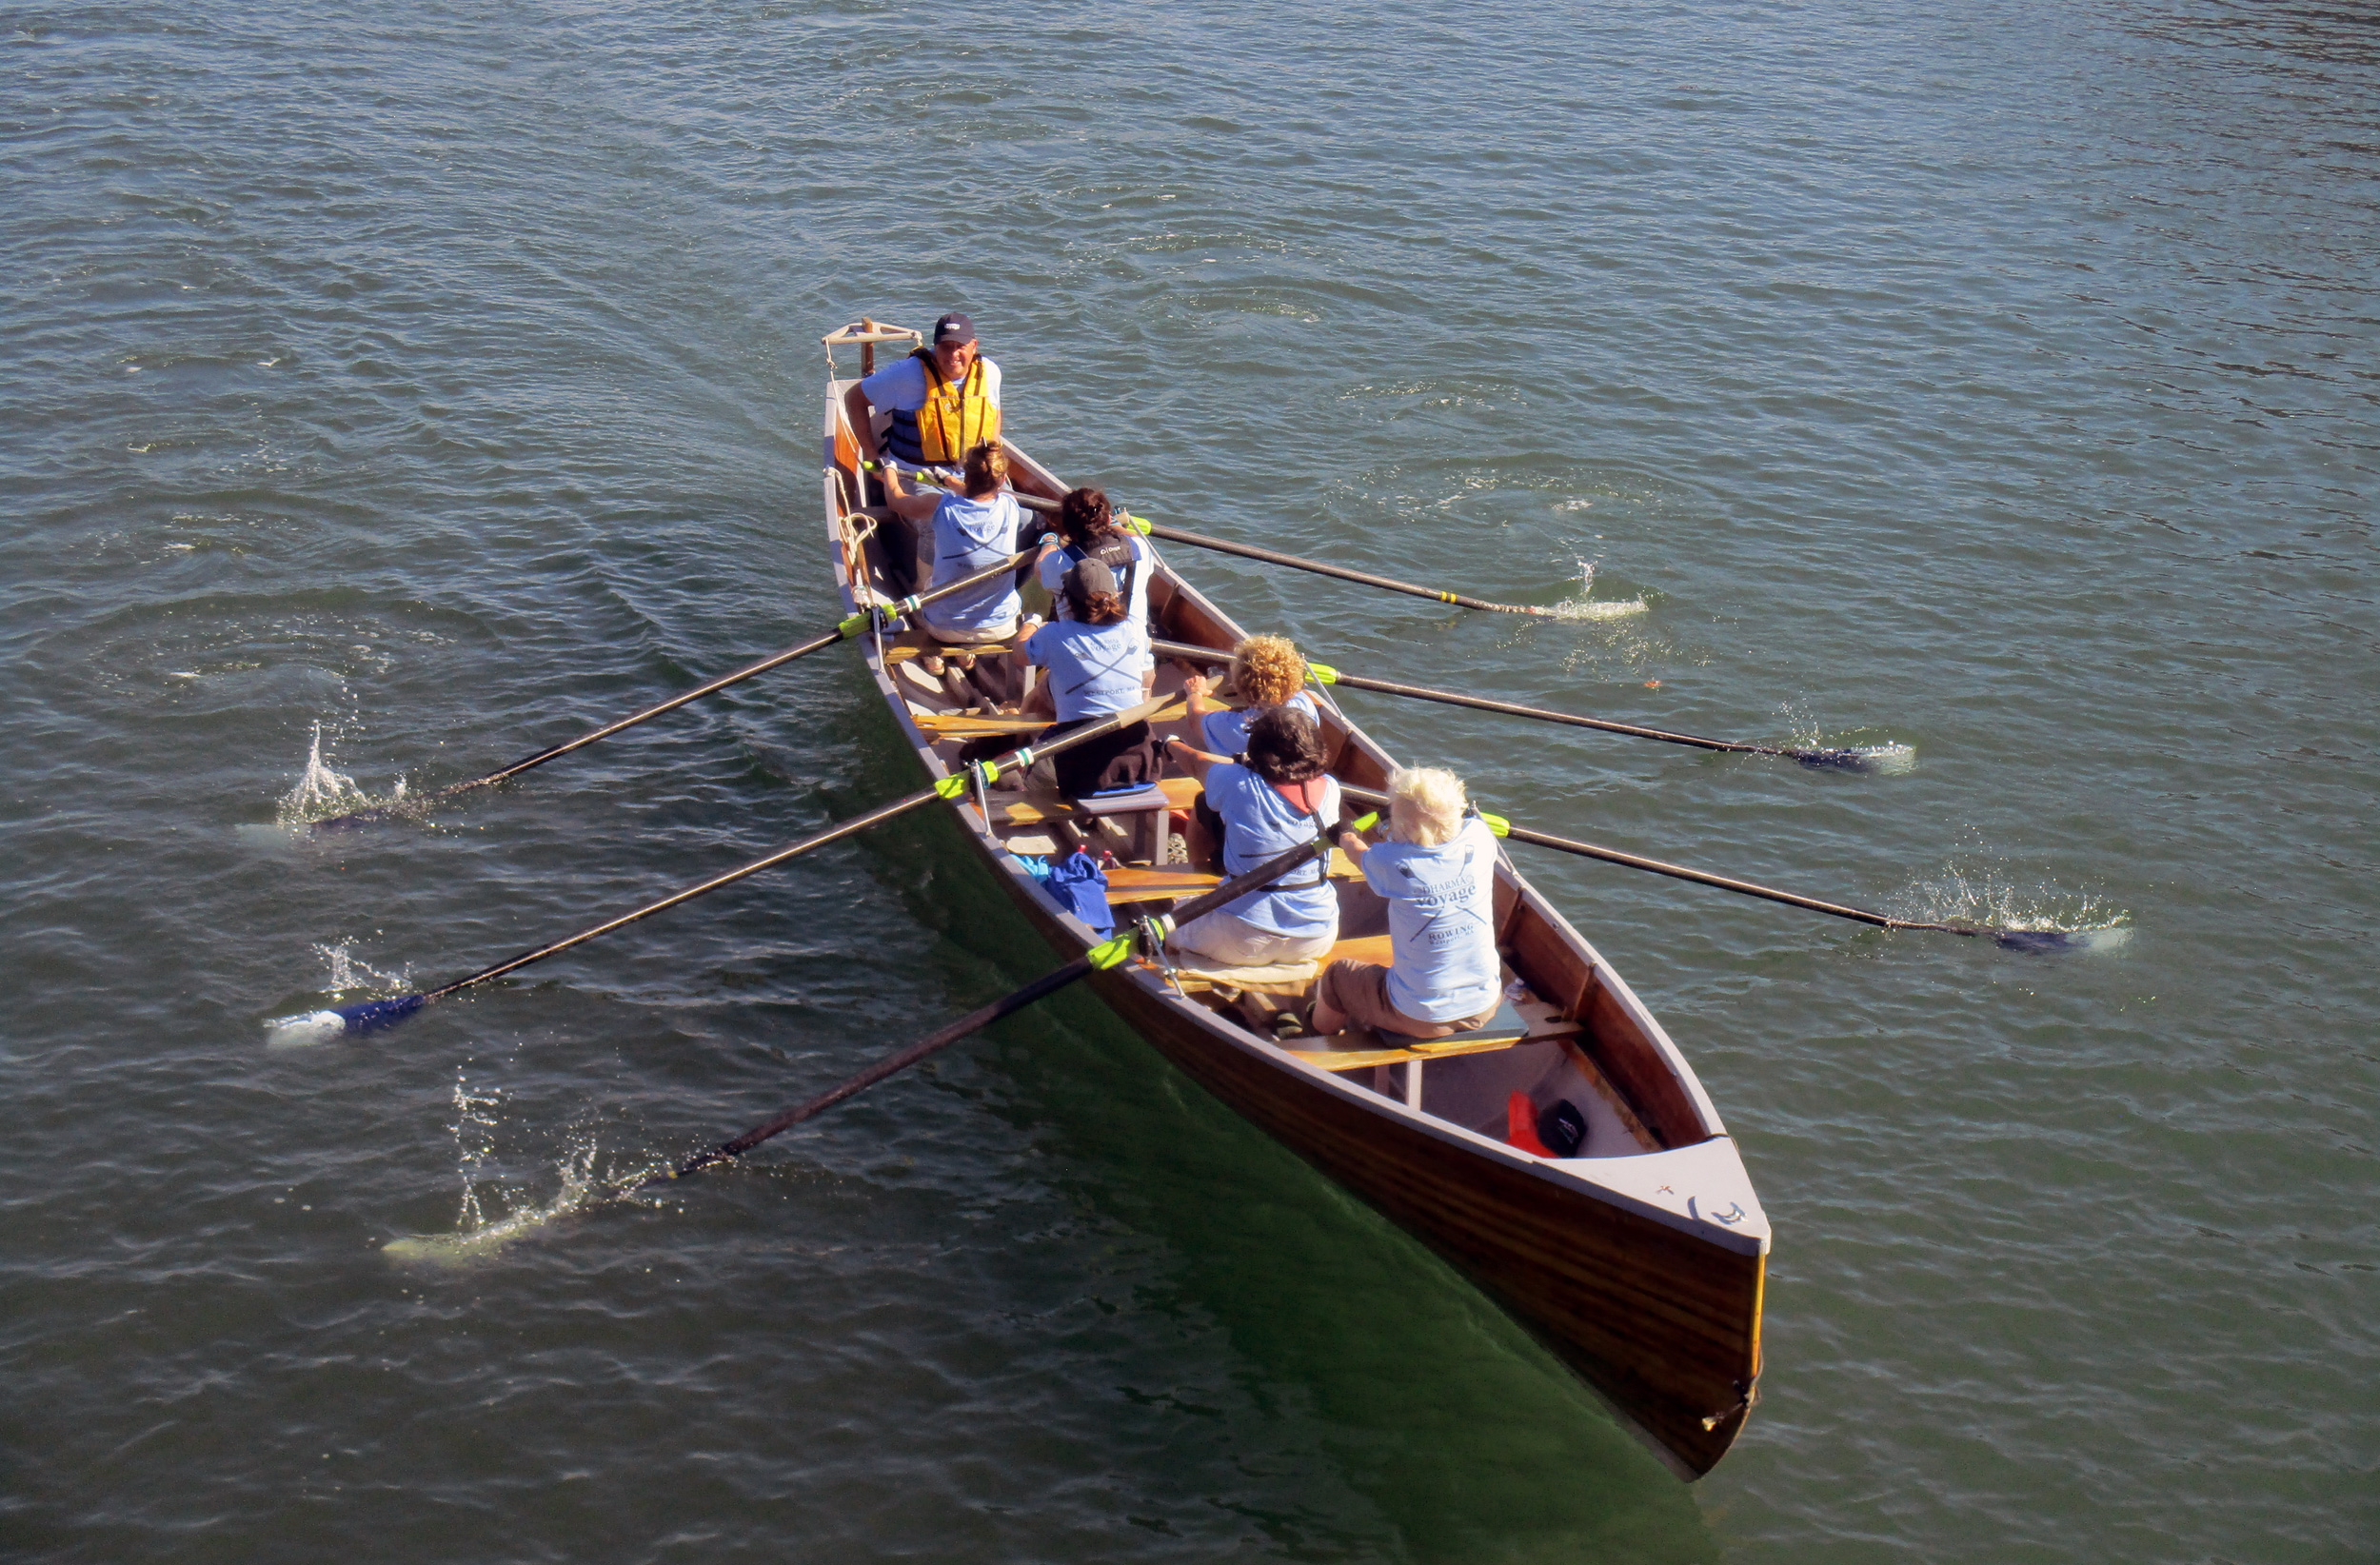 Community Rowing